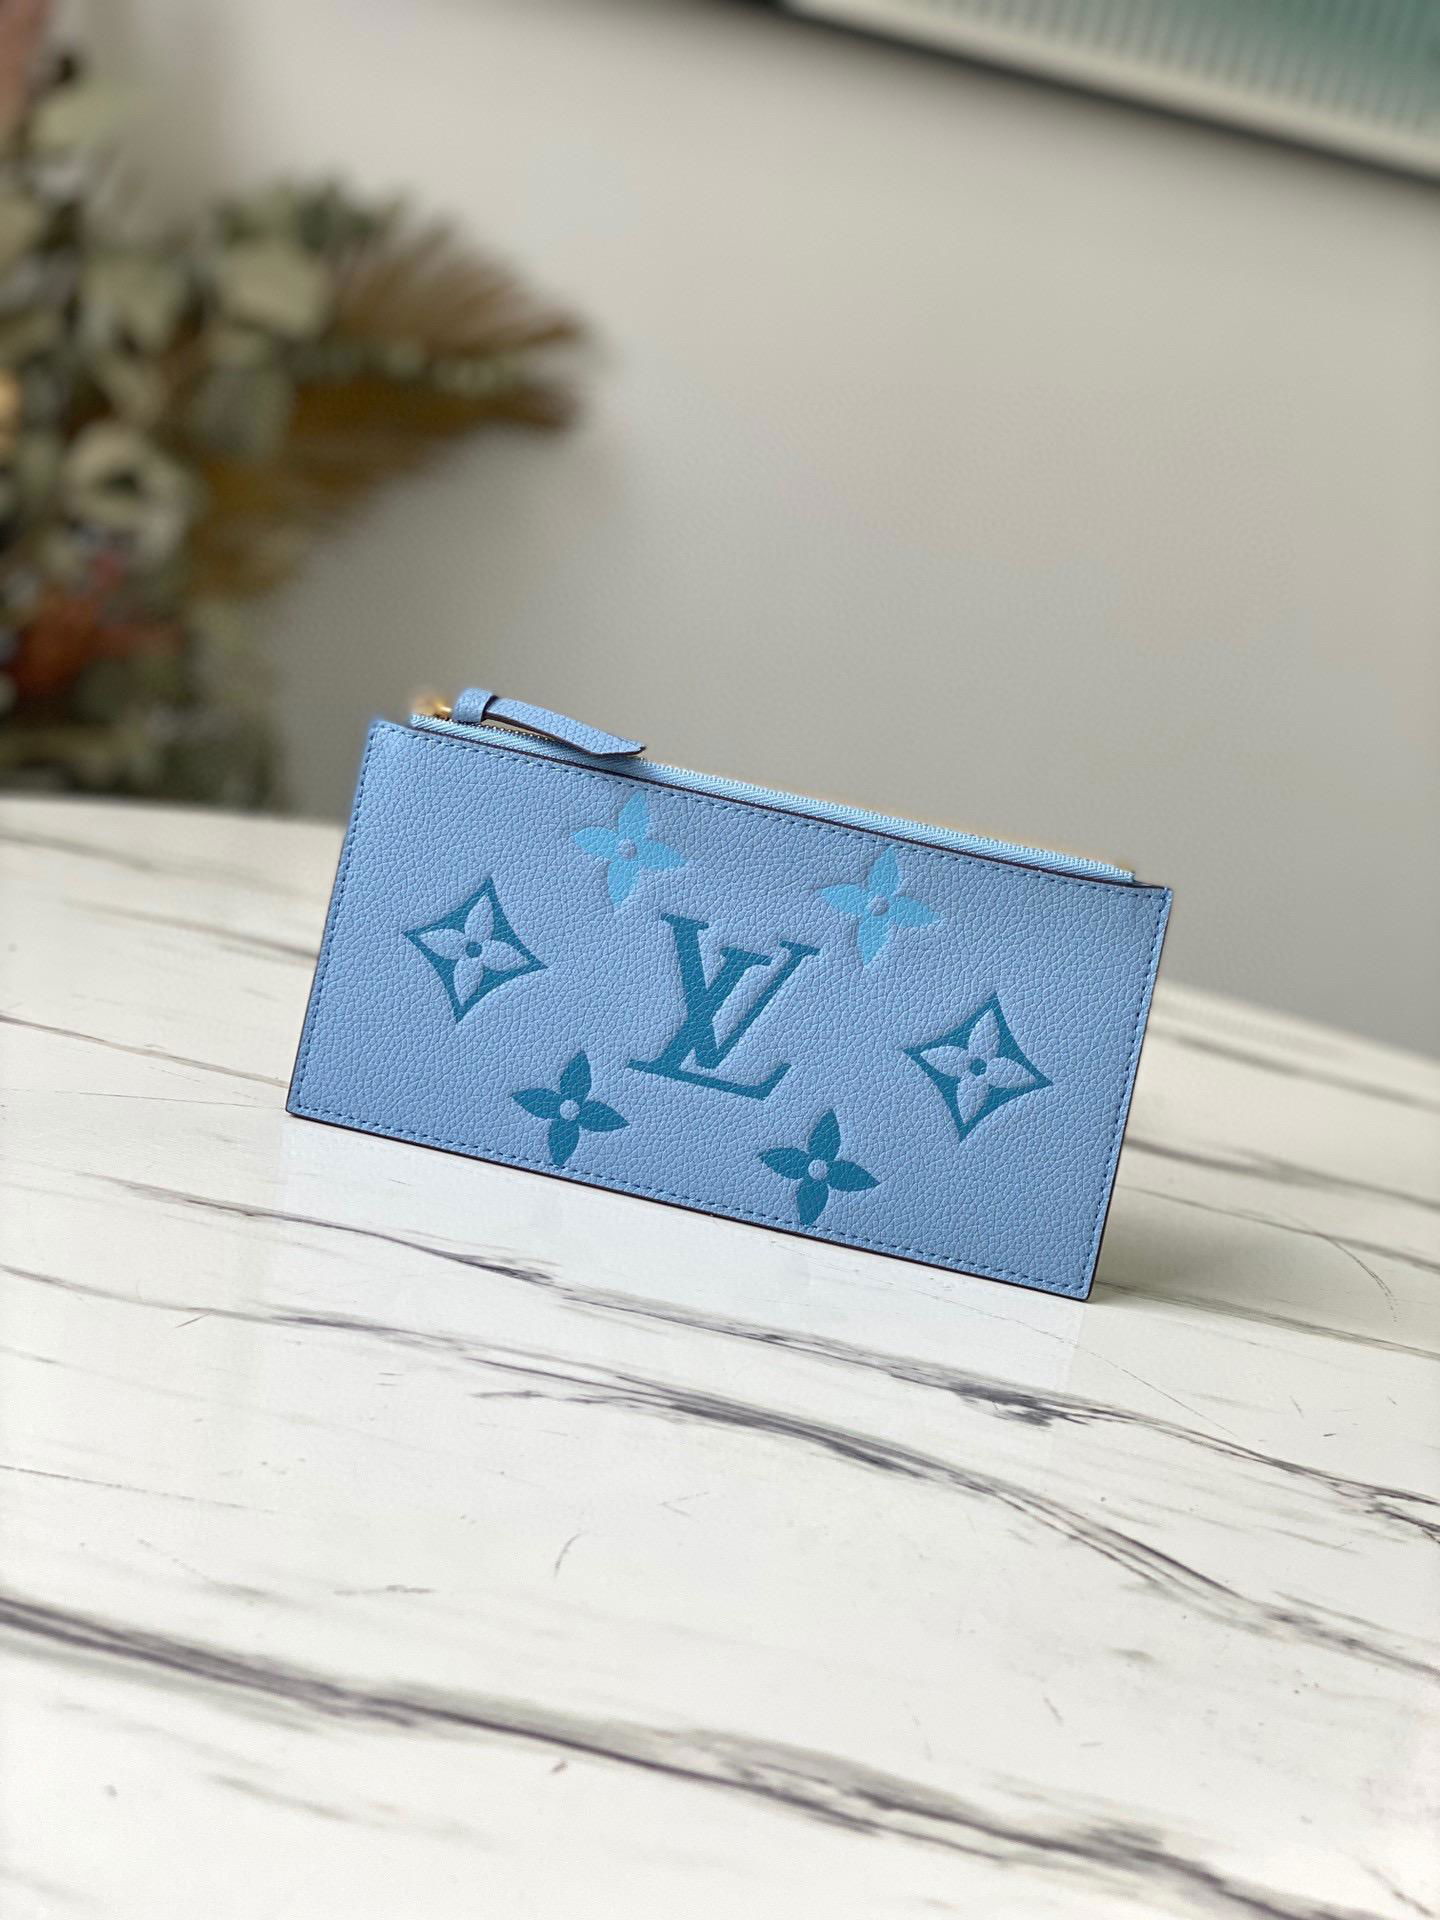               Felicie Pochette Blue Monogram leather Chain envelope bag clutch  4